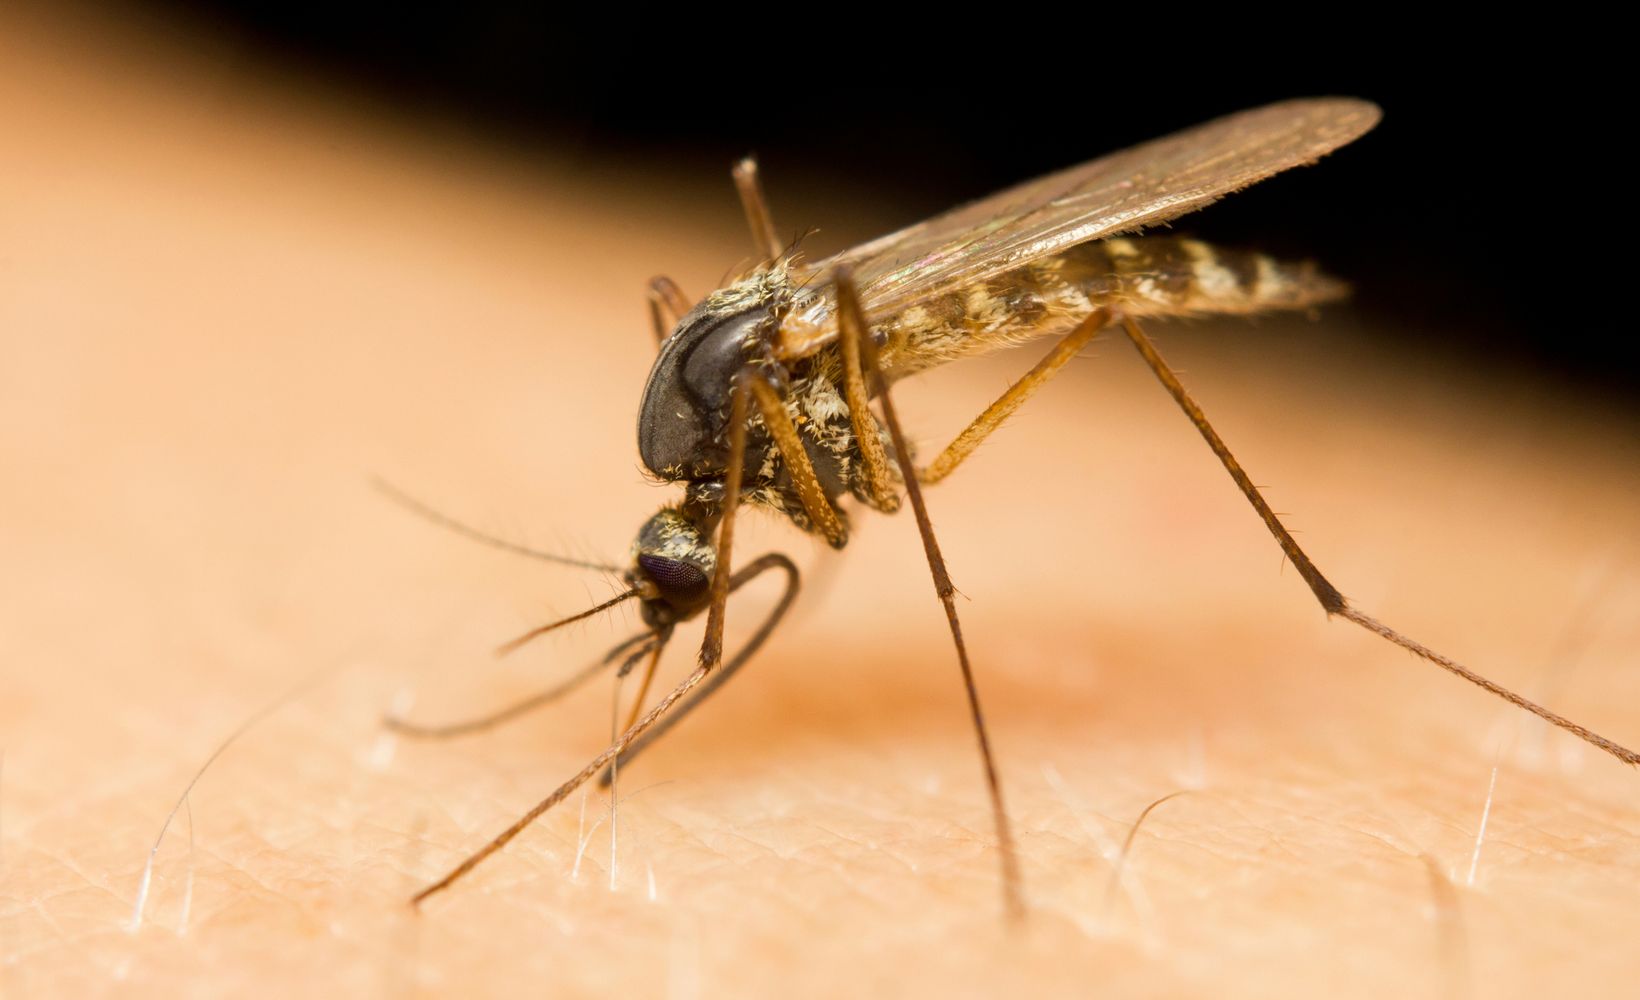 Mosquito on Skin